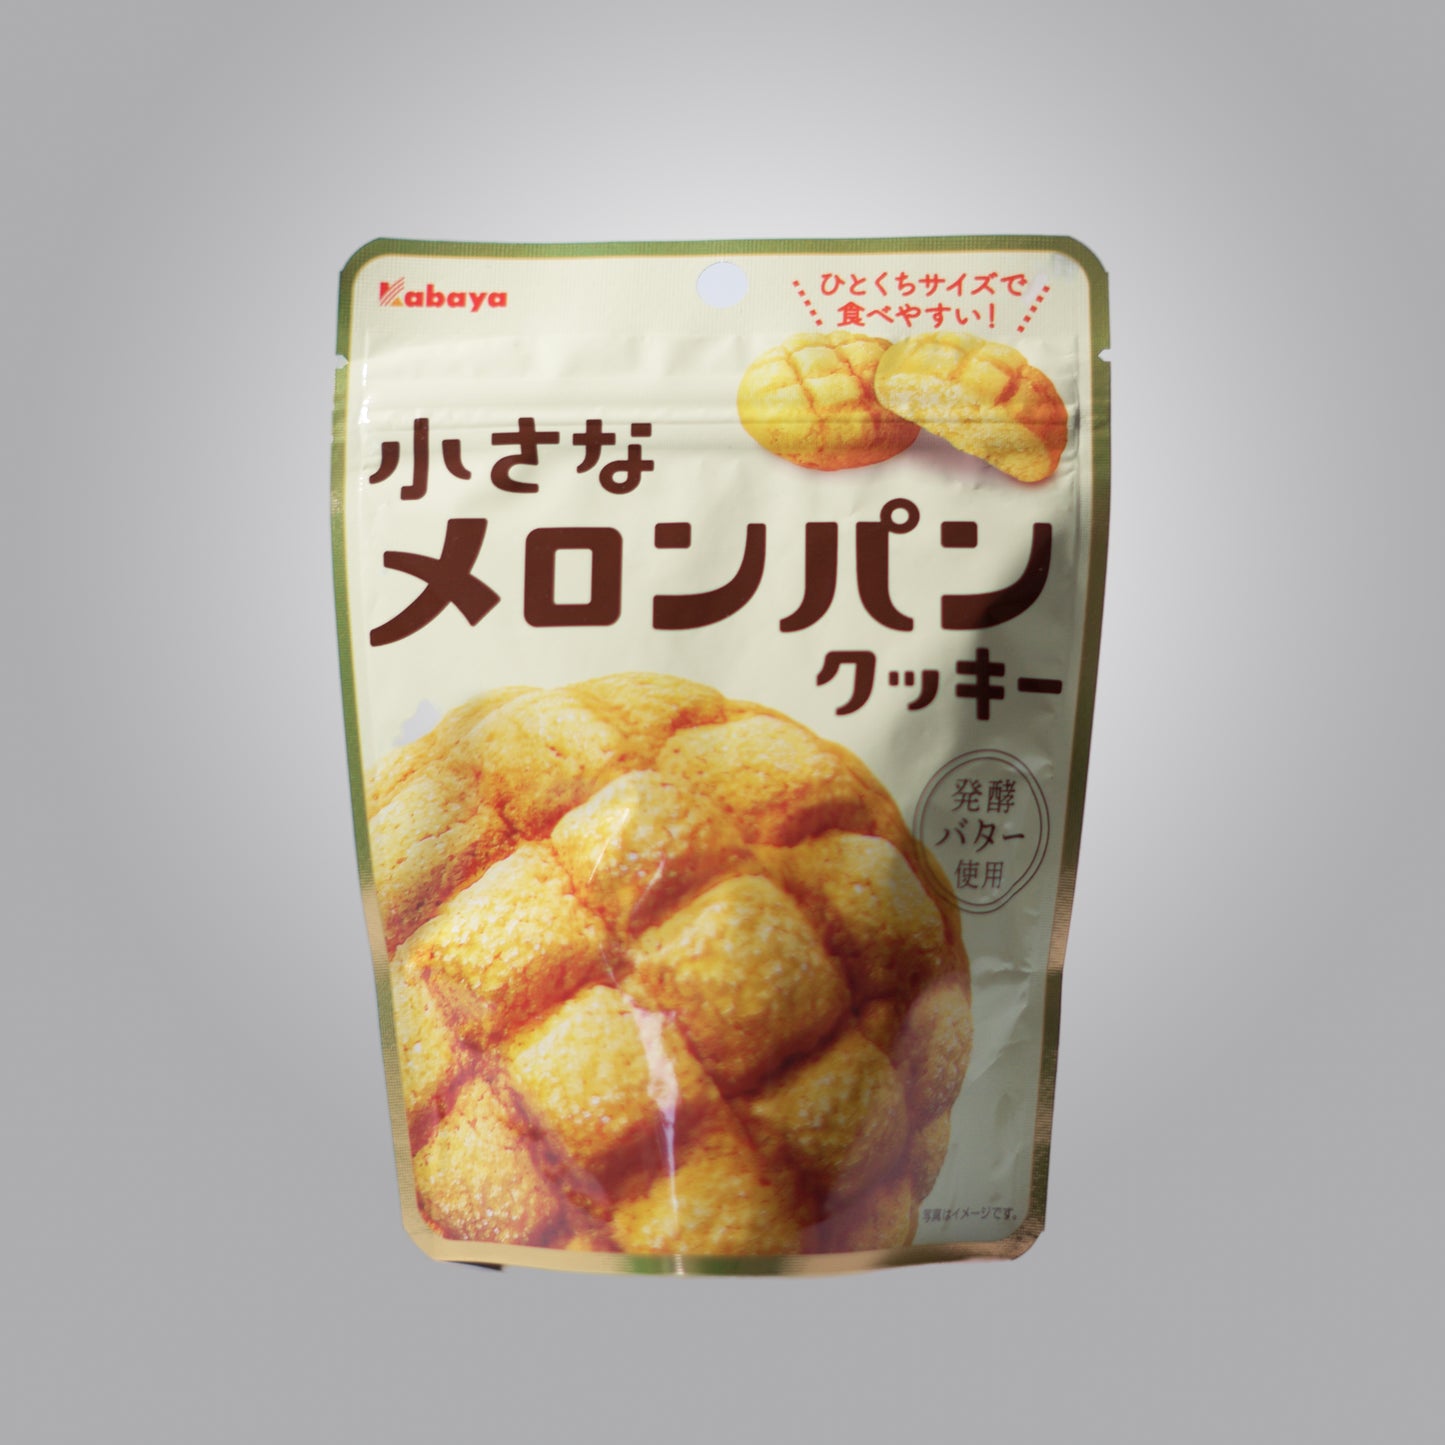 Expired - Kabaya Melon Pan Mini Cookie Biscuit